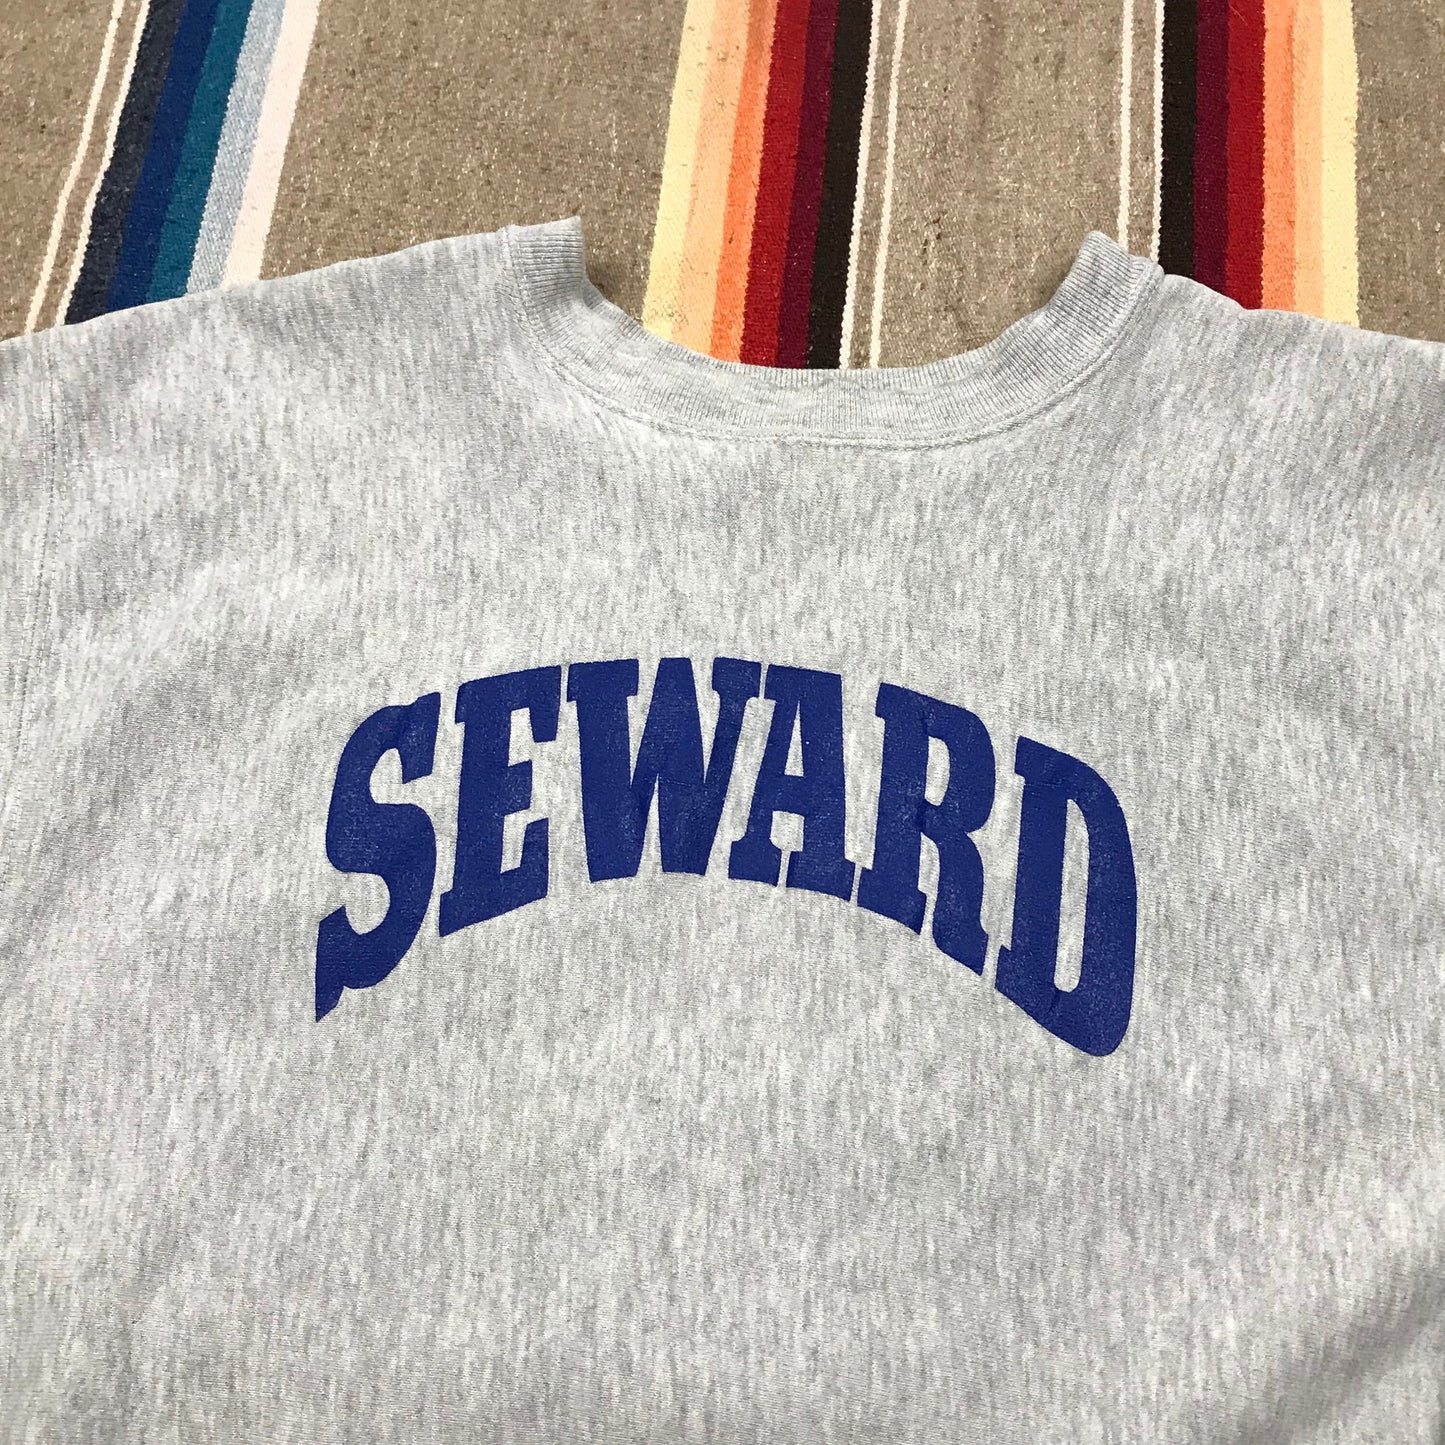 1980s Champion Reverse Weave Sweatshirt Seward Made in USA Size L/XL